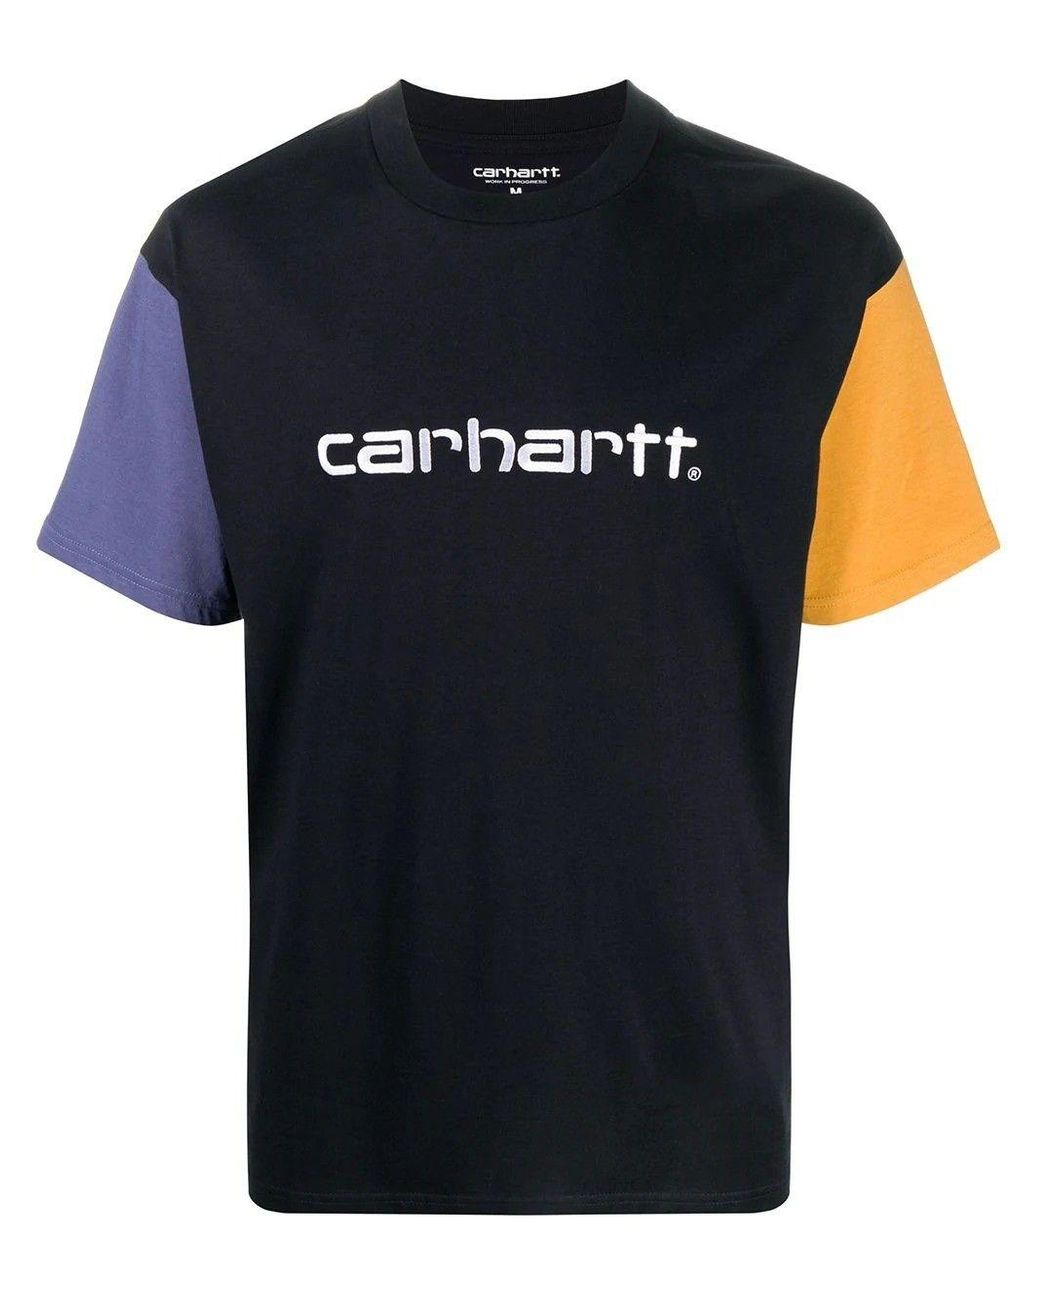 Carhartt Cotton T-shirt in Black for Men - Lyst